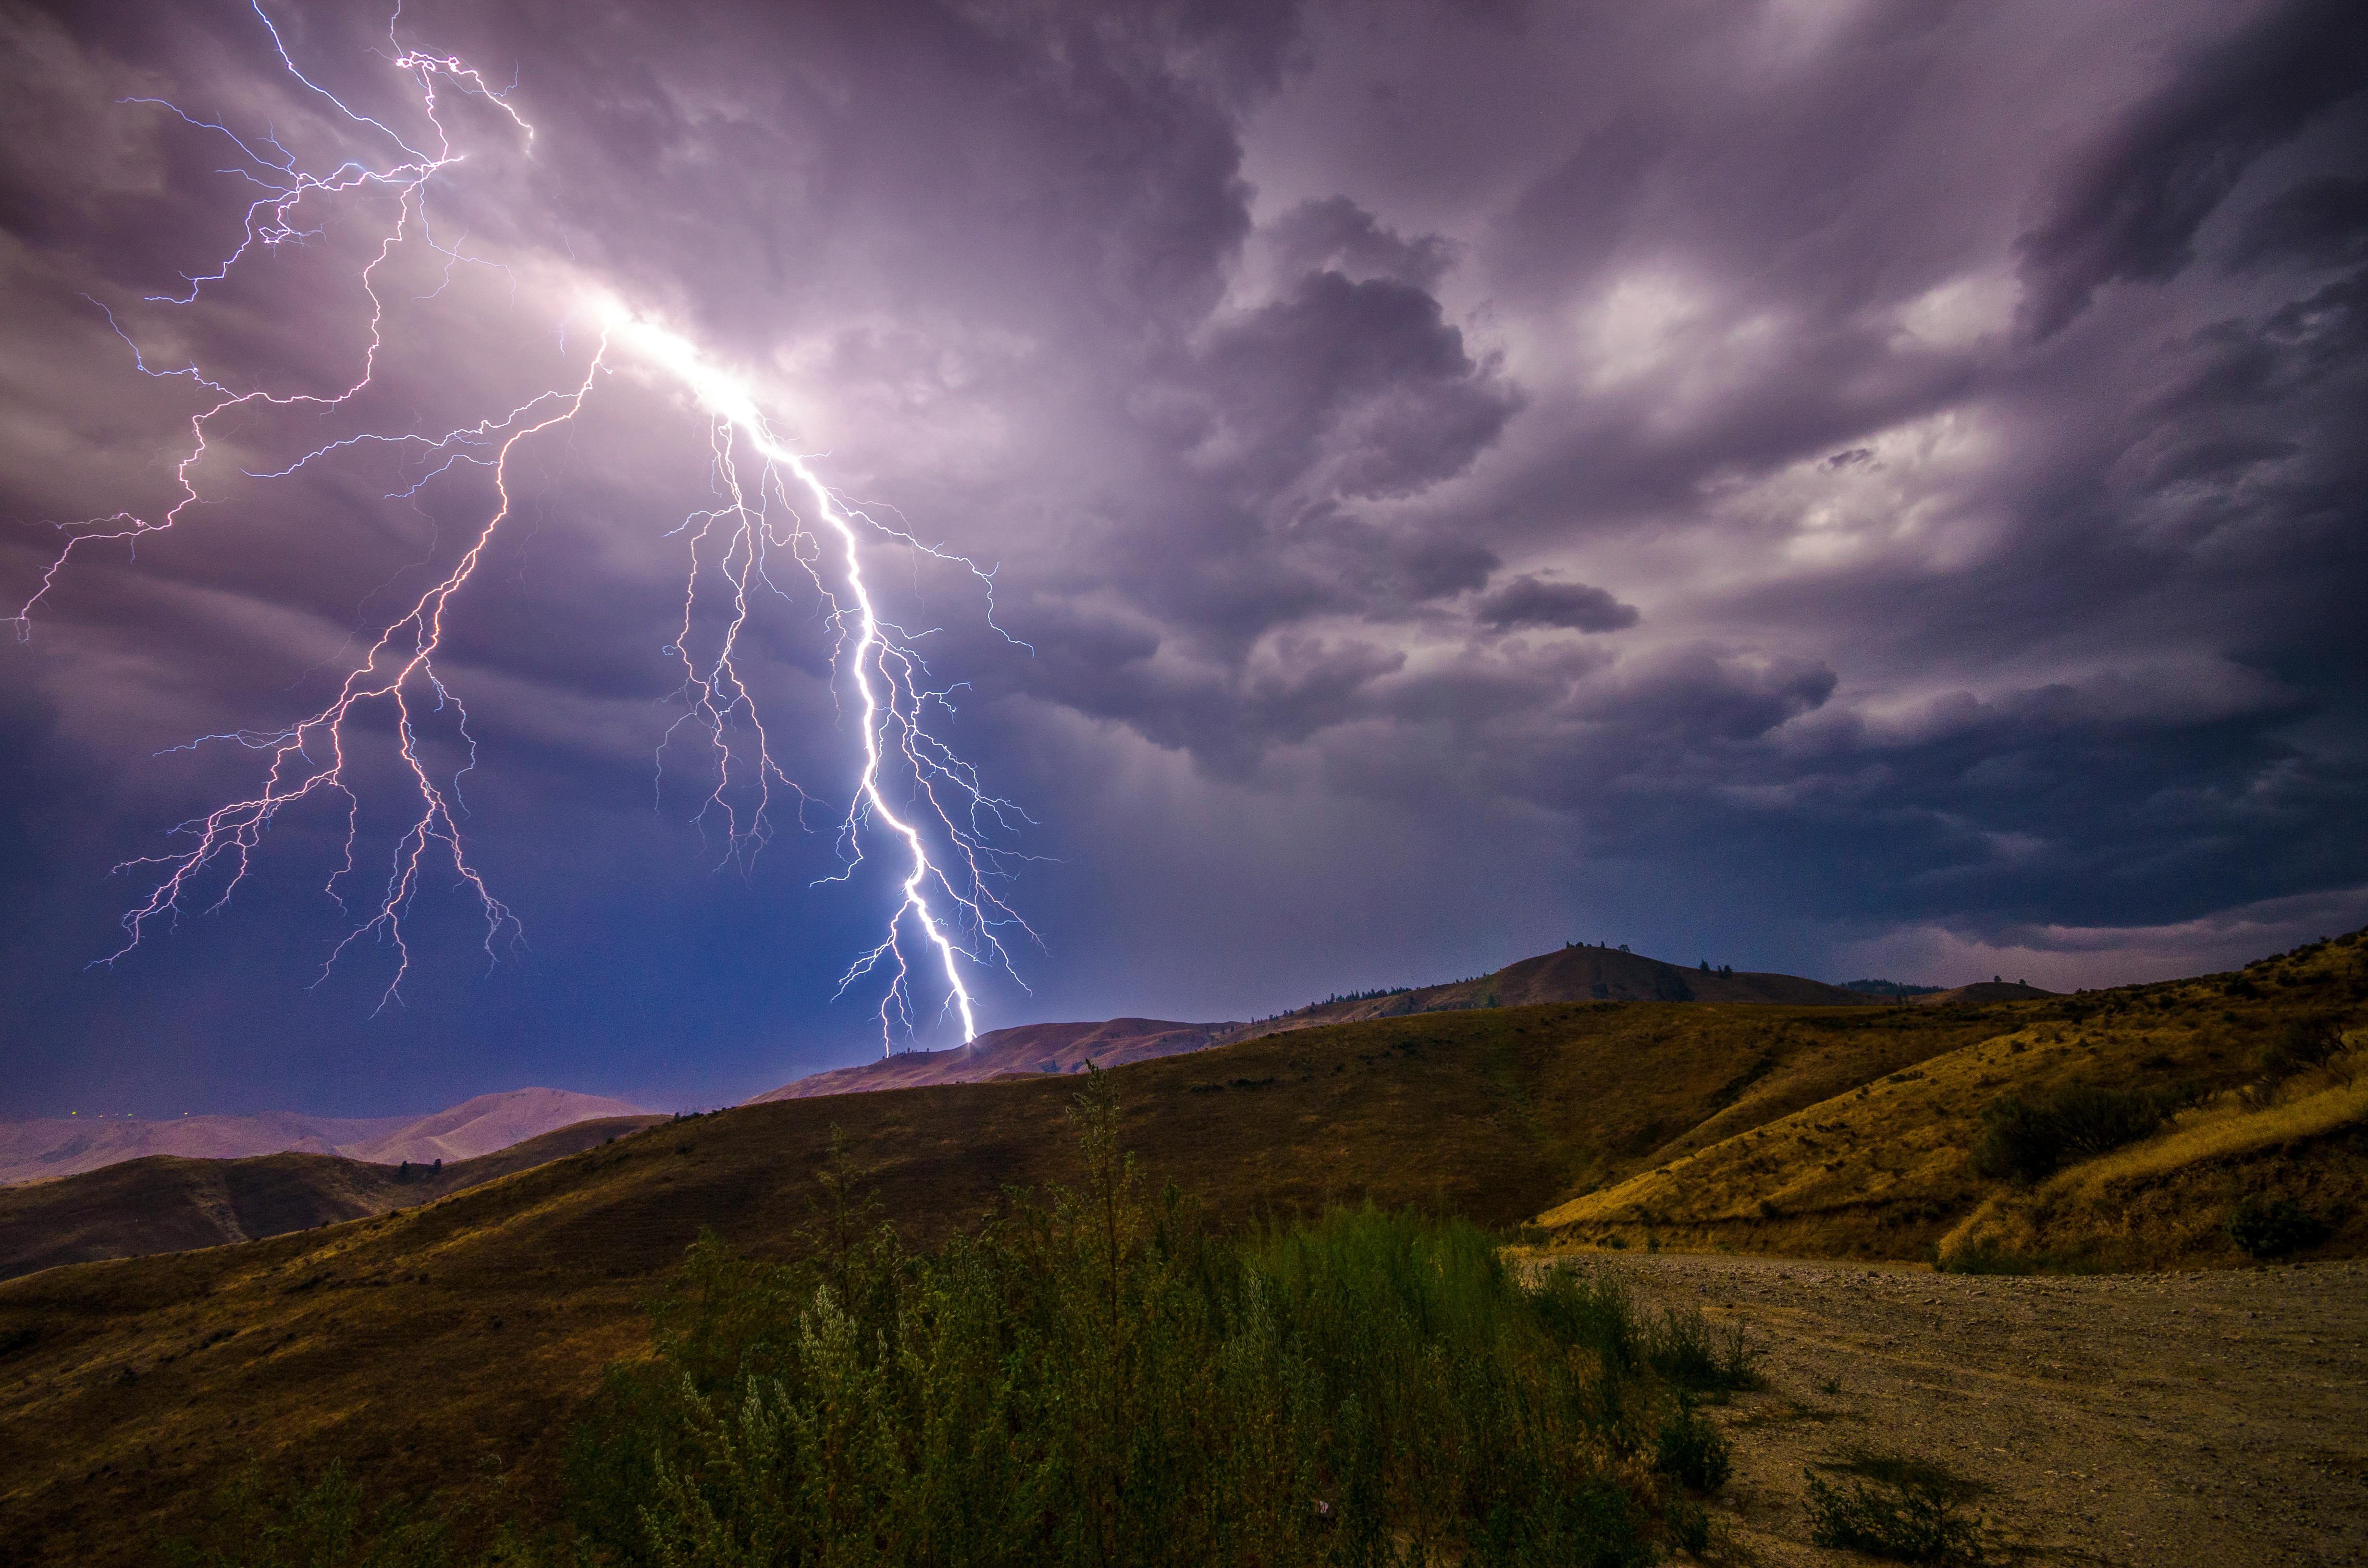 Thunder Storm Images  Free Download on Freepik